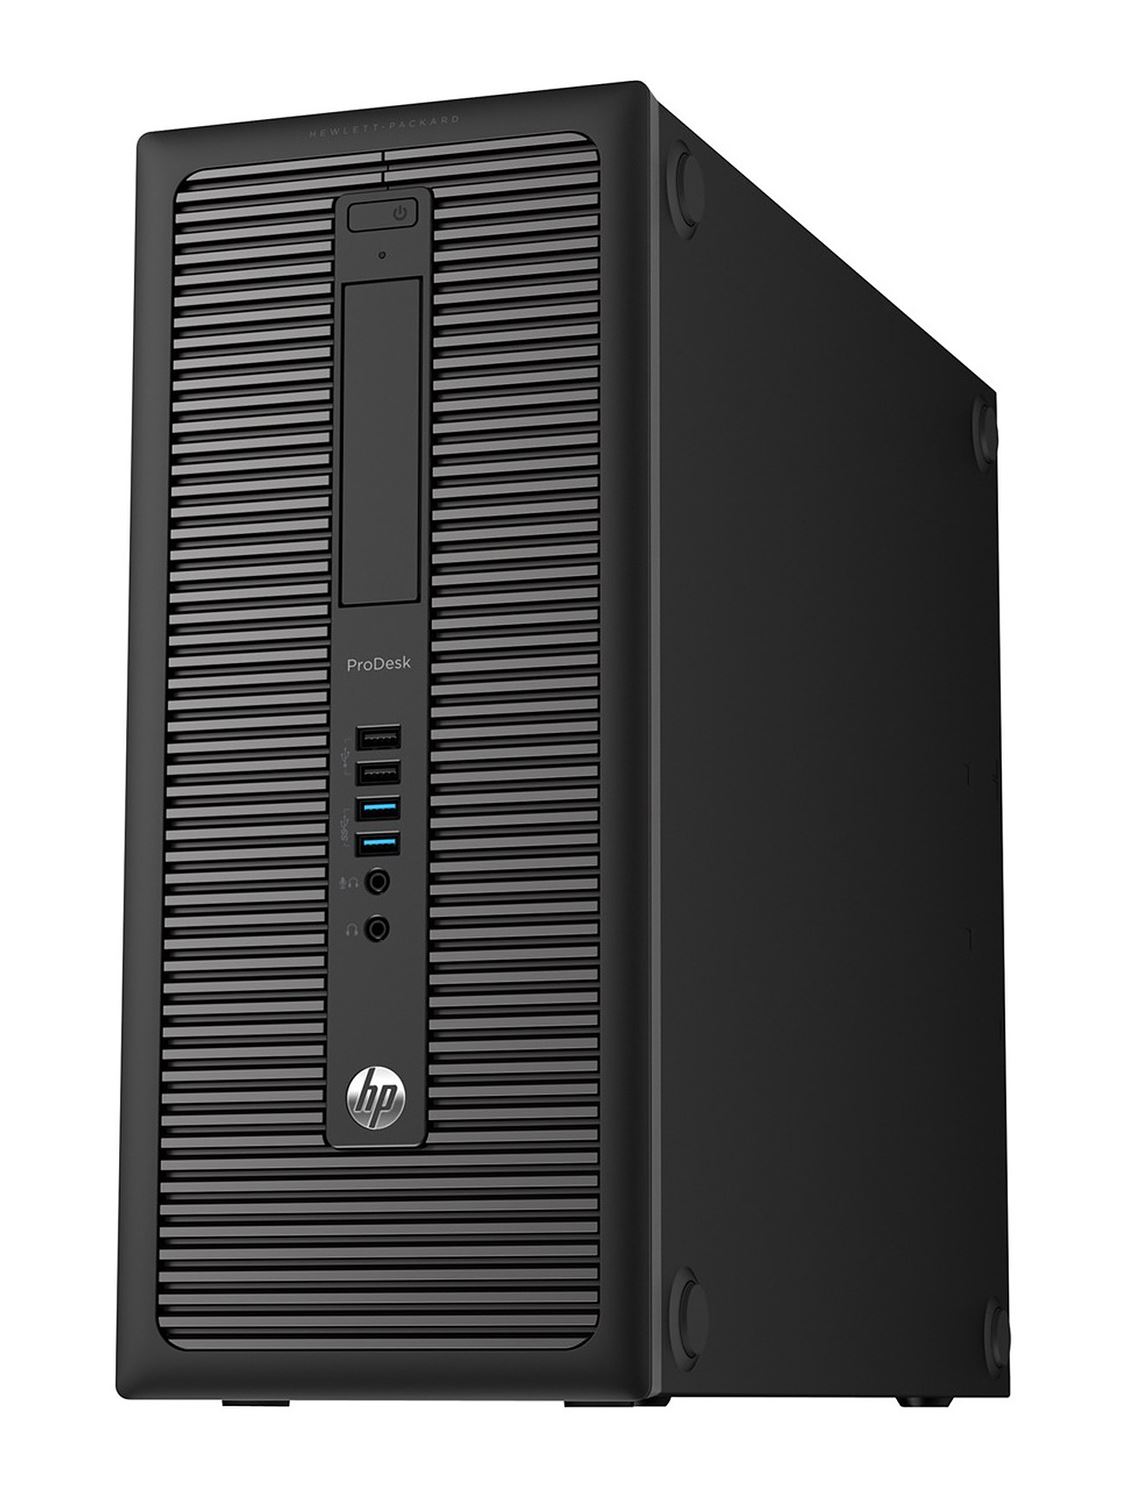 HP PC 600 G1 Tower, i5-4430, 8GB, 500GB HDD, DVD, REF SQR -κωδικός PC-1400-SQR